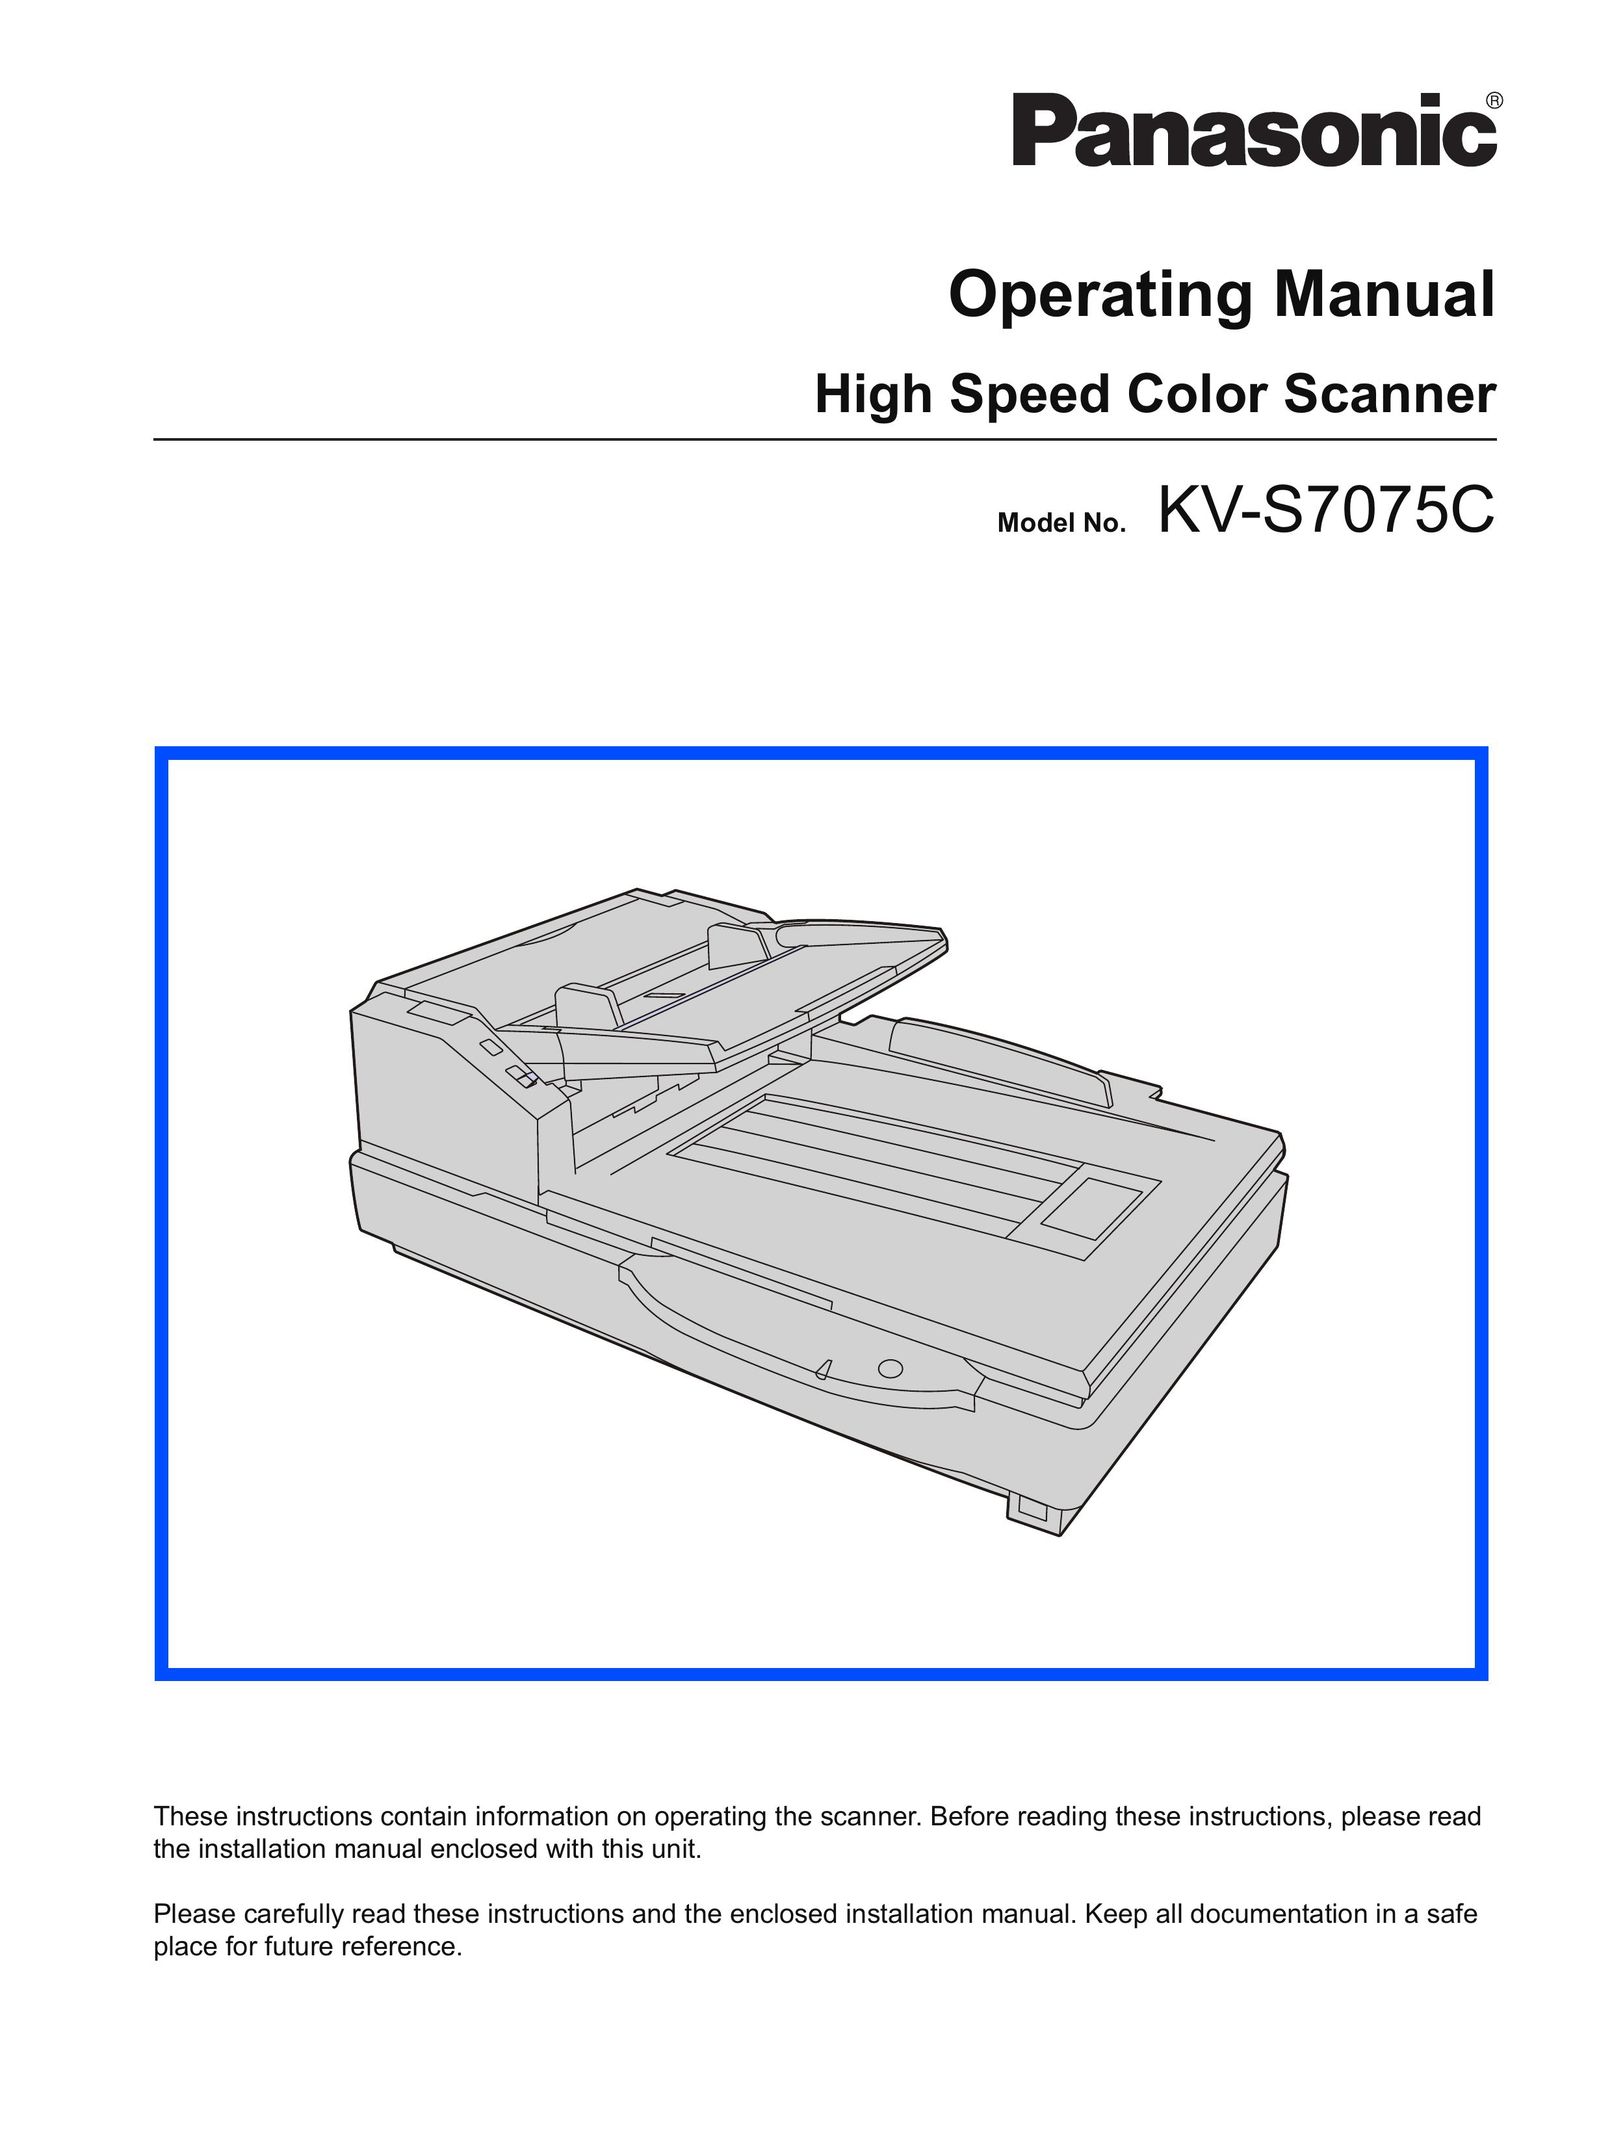 Panasonic KV-S7075C Scanner User Manual